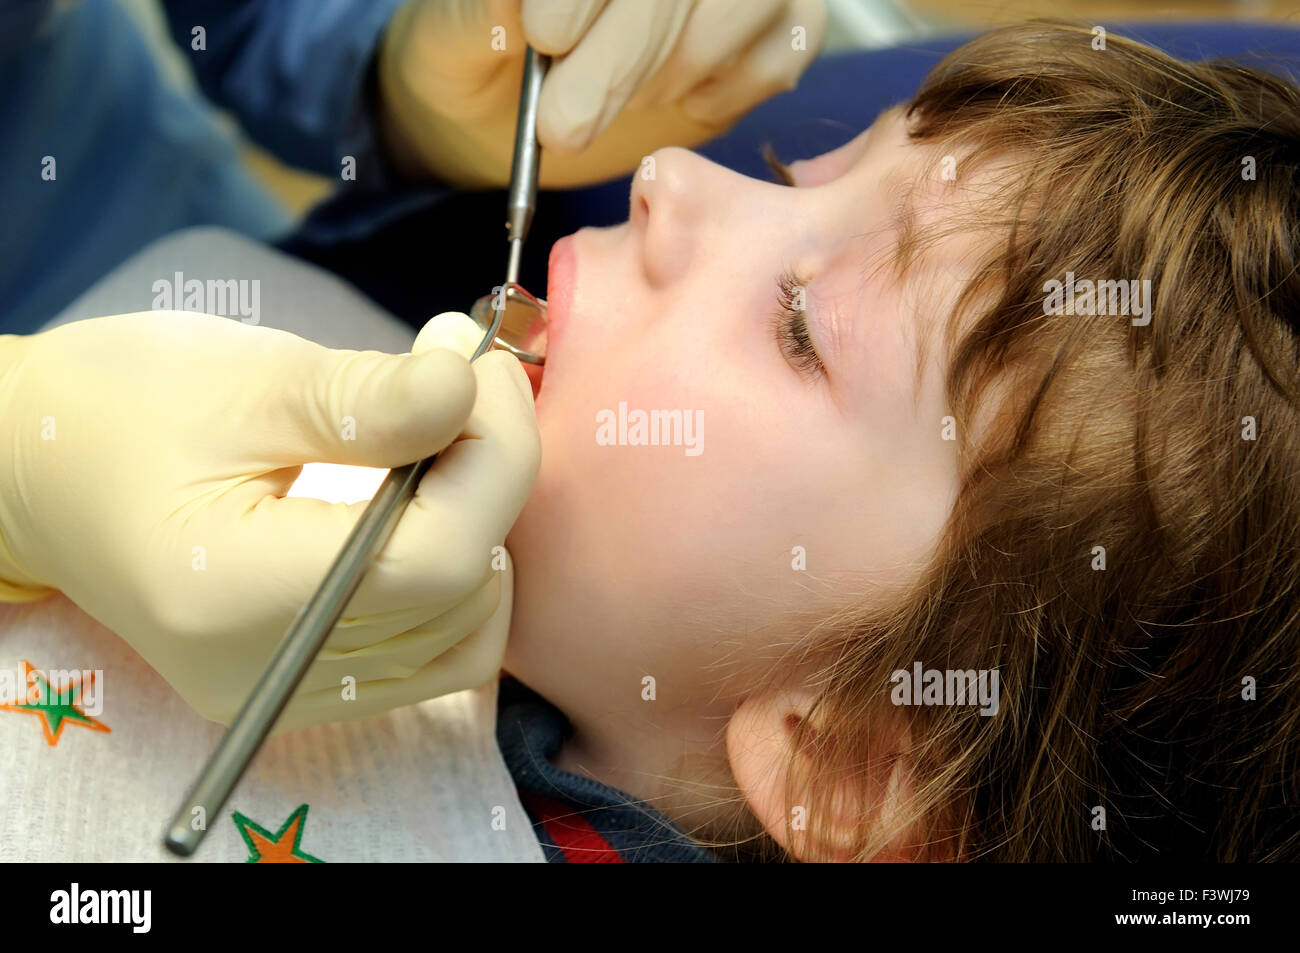 at a dentist examination Stock Photo